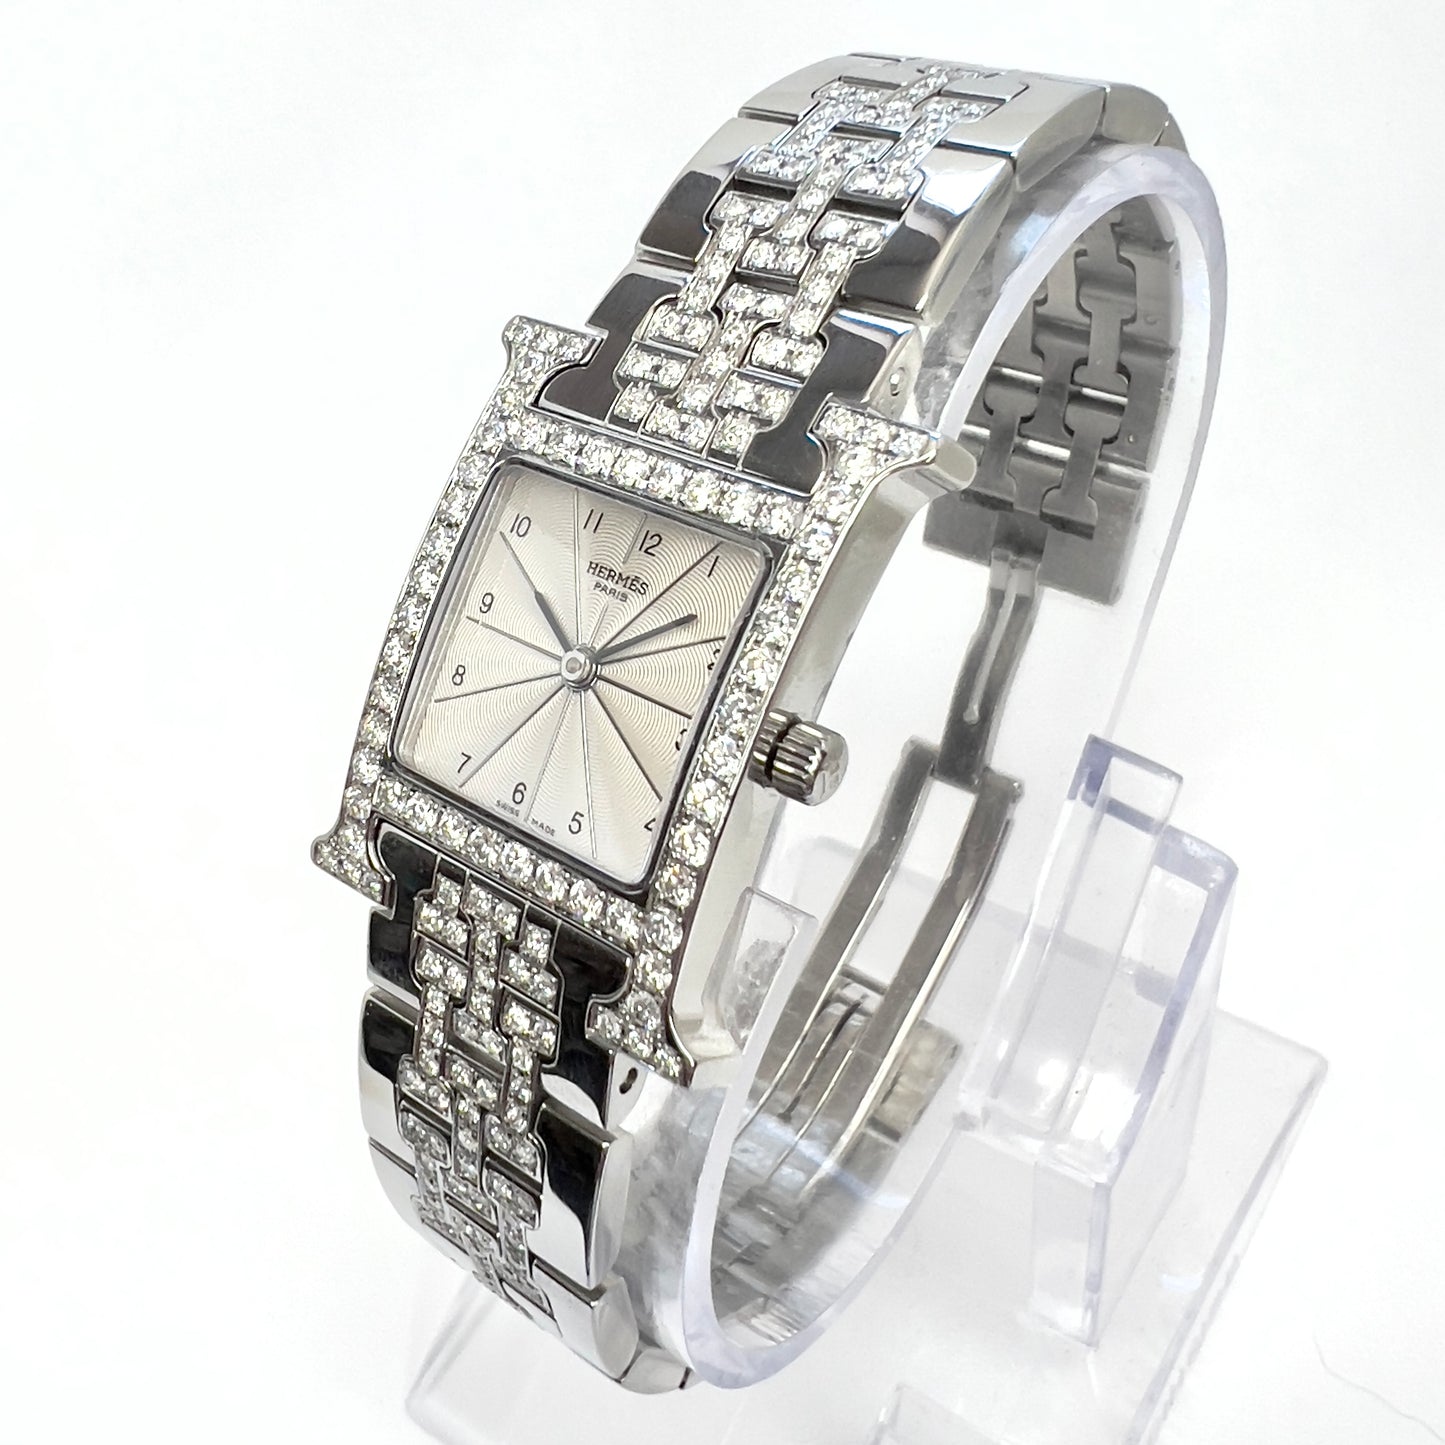 HERMÈS HEURE H Quartz 25mm Steel ~1.83TCW DIAMOND Watch